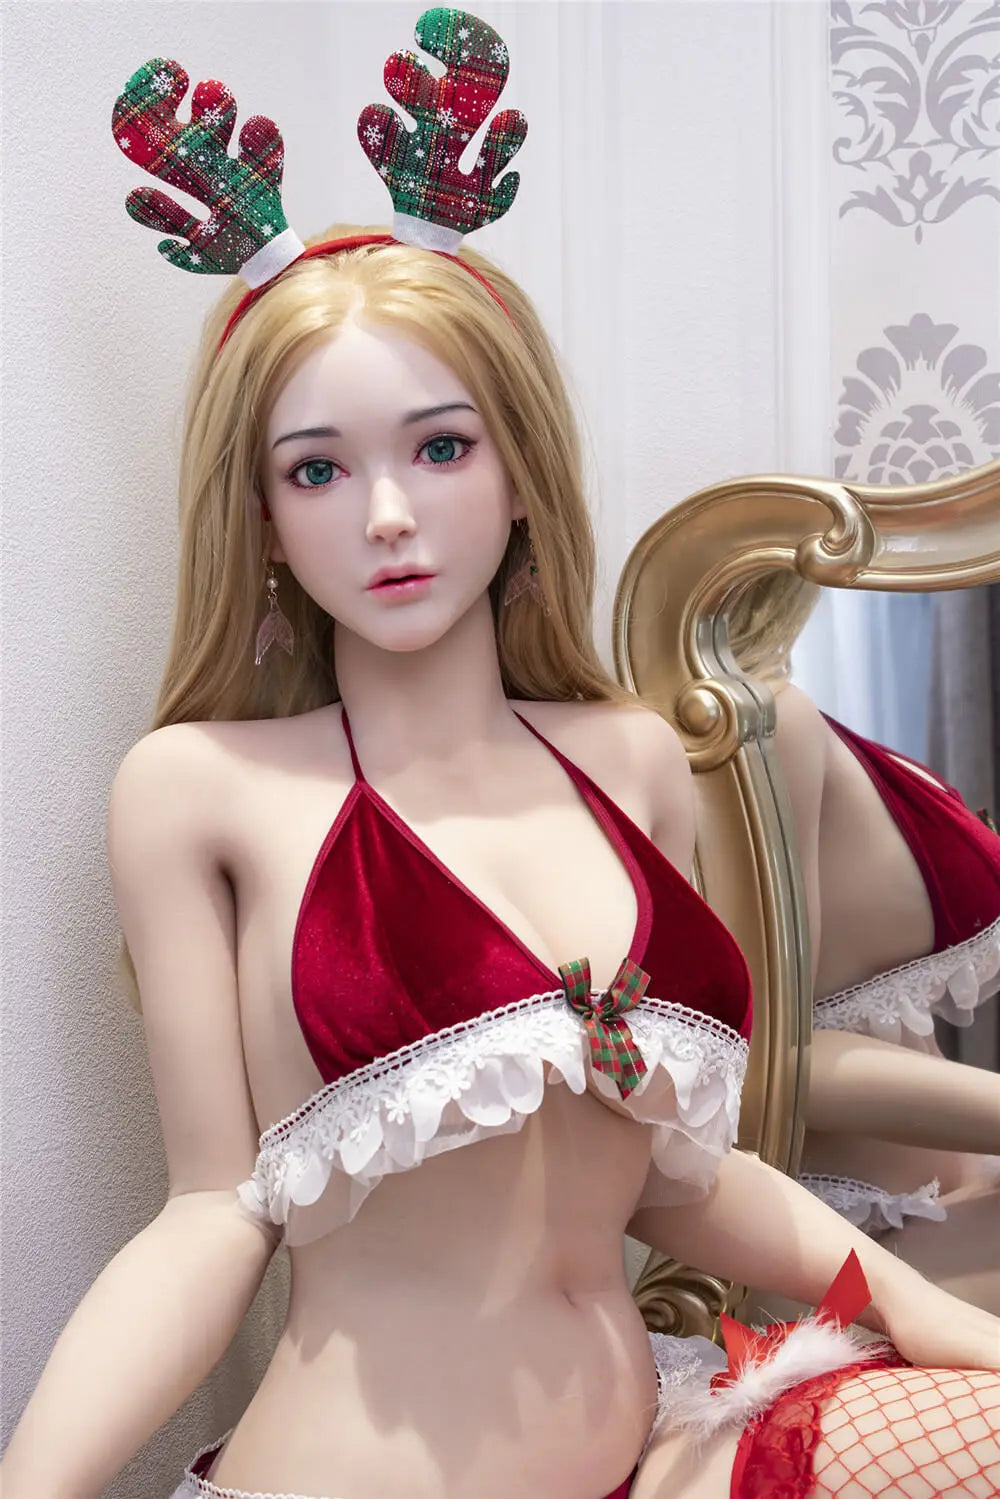 Bonecas de Sexo - Sex Doll Realista de Silicone - Tamanho Real - 20% Desconto